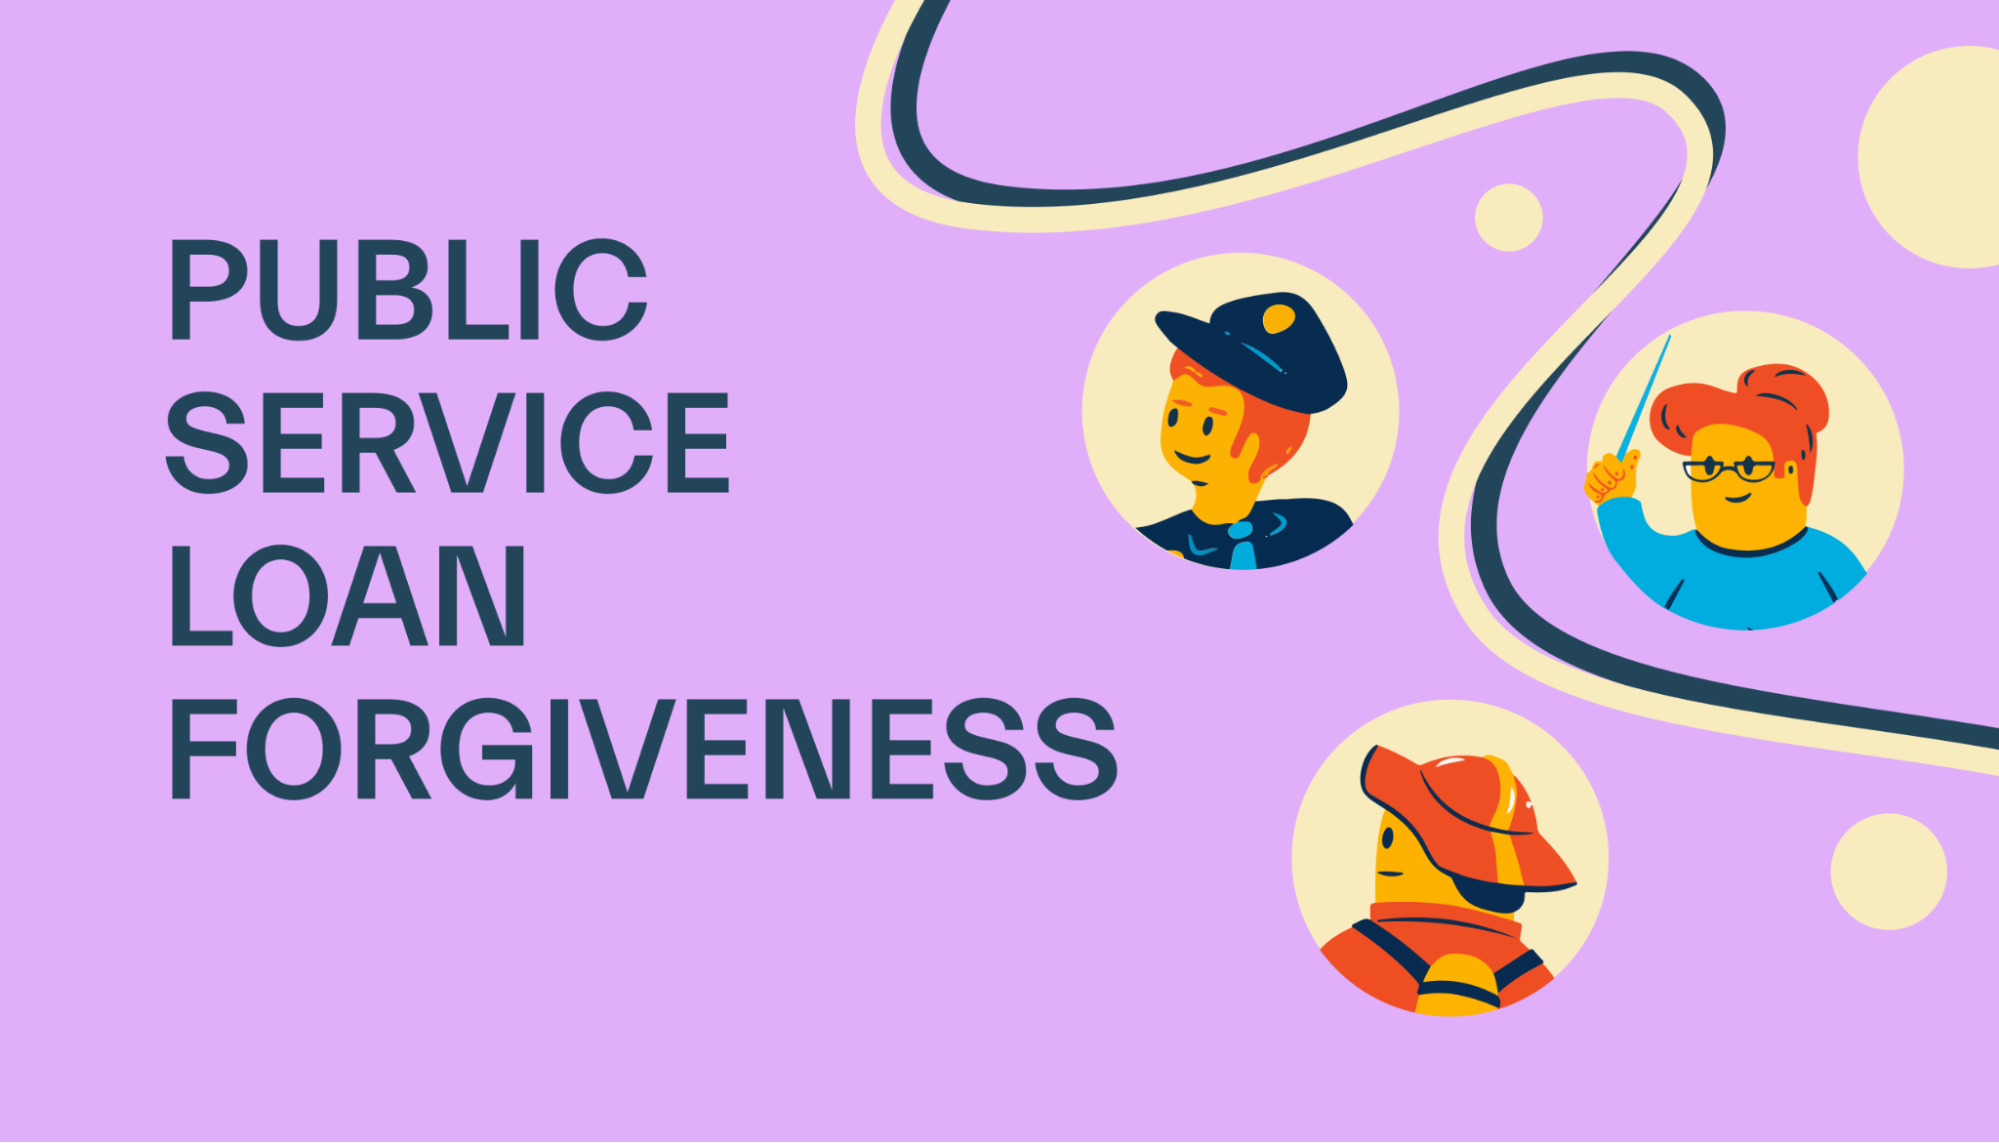 What is public service loan forgiveness